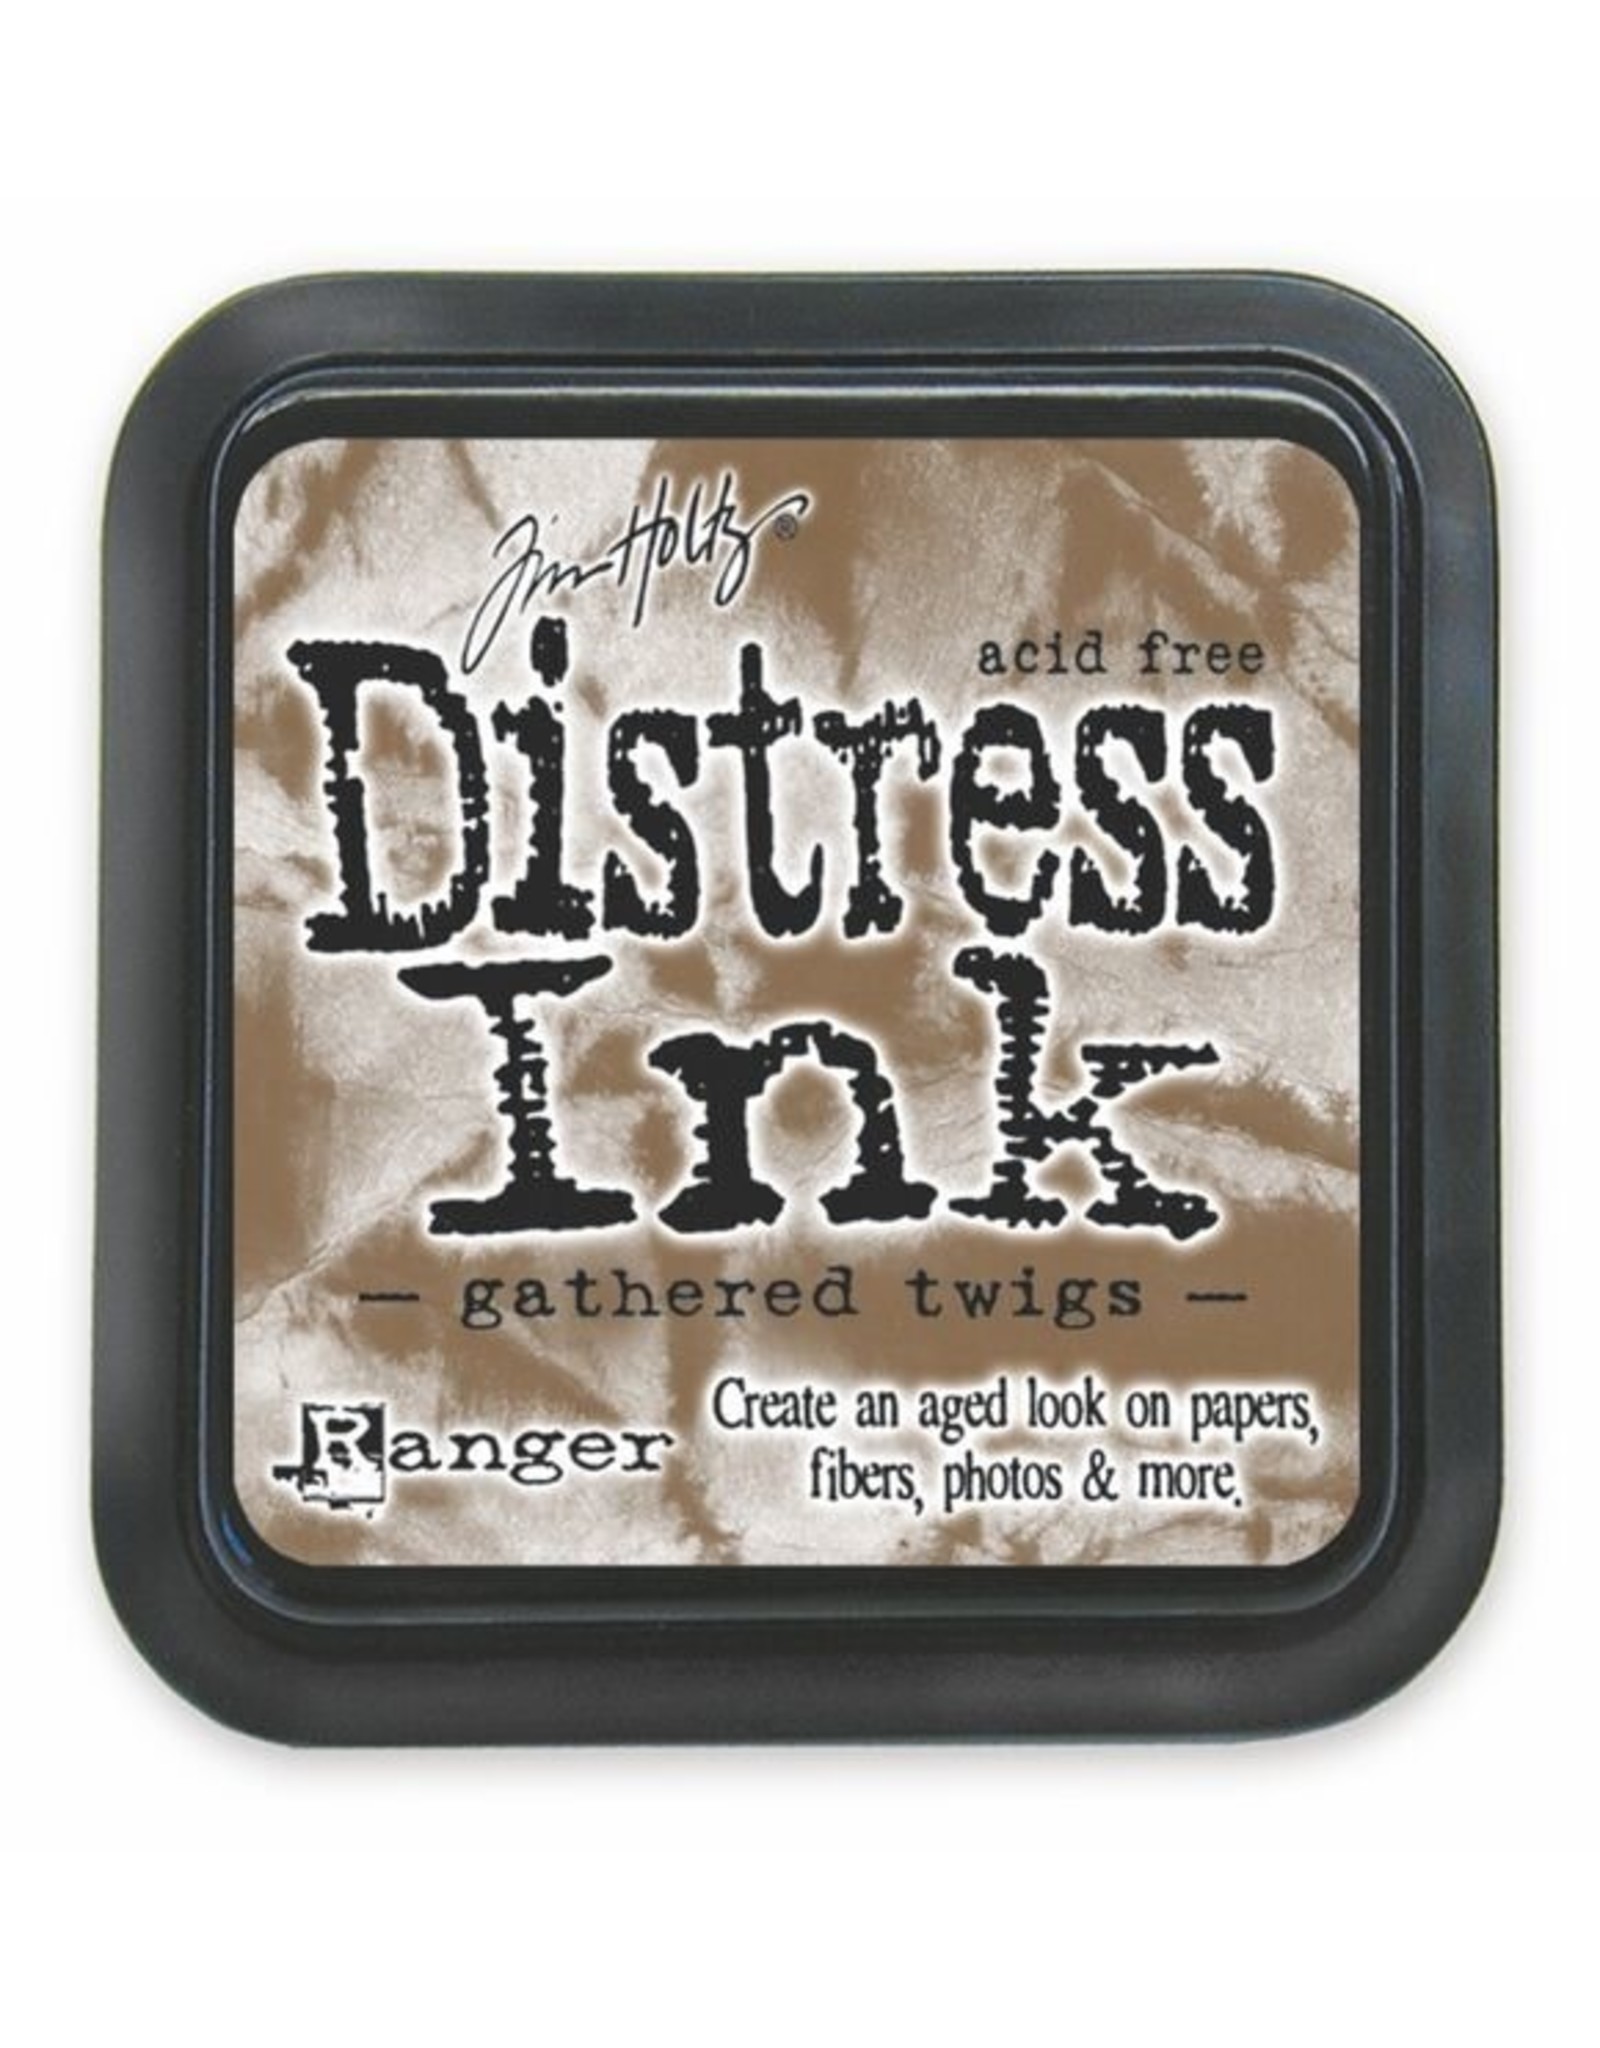 Tim Holtz - Ranger Distress Ink Gathered Twigs